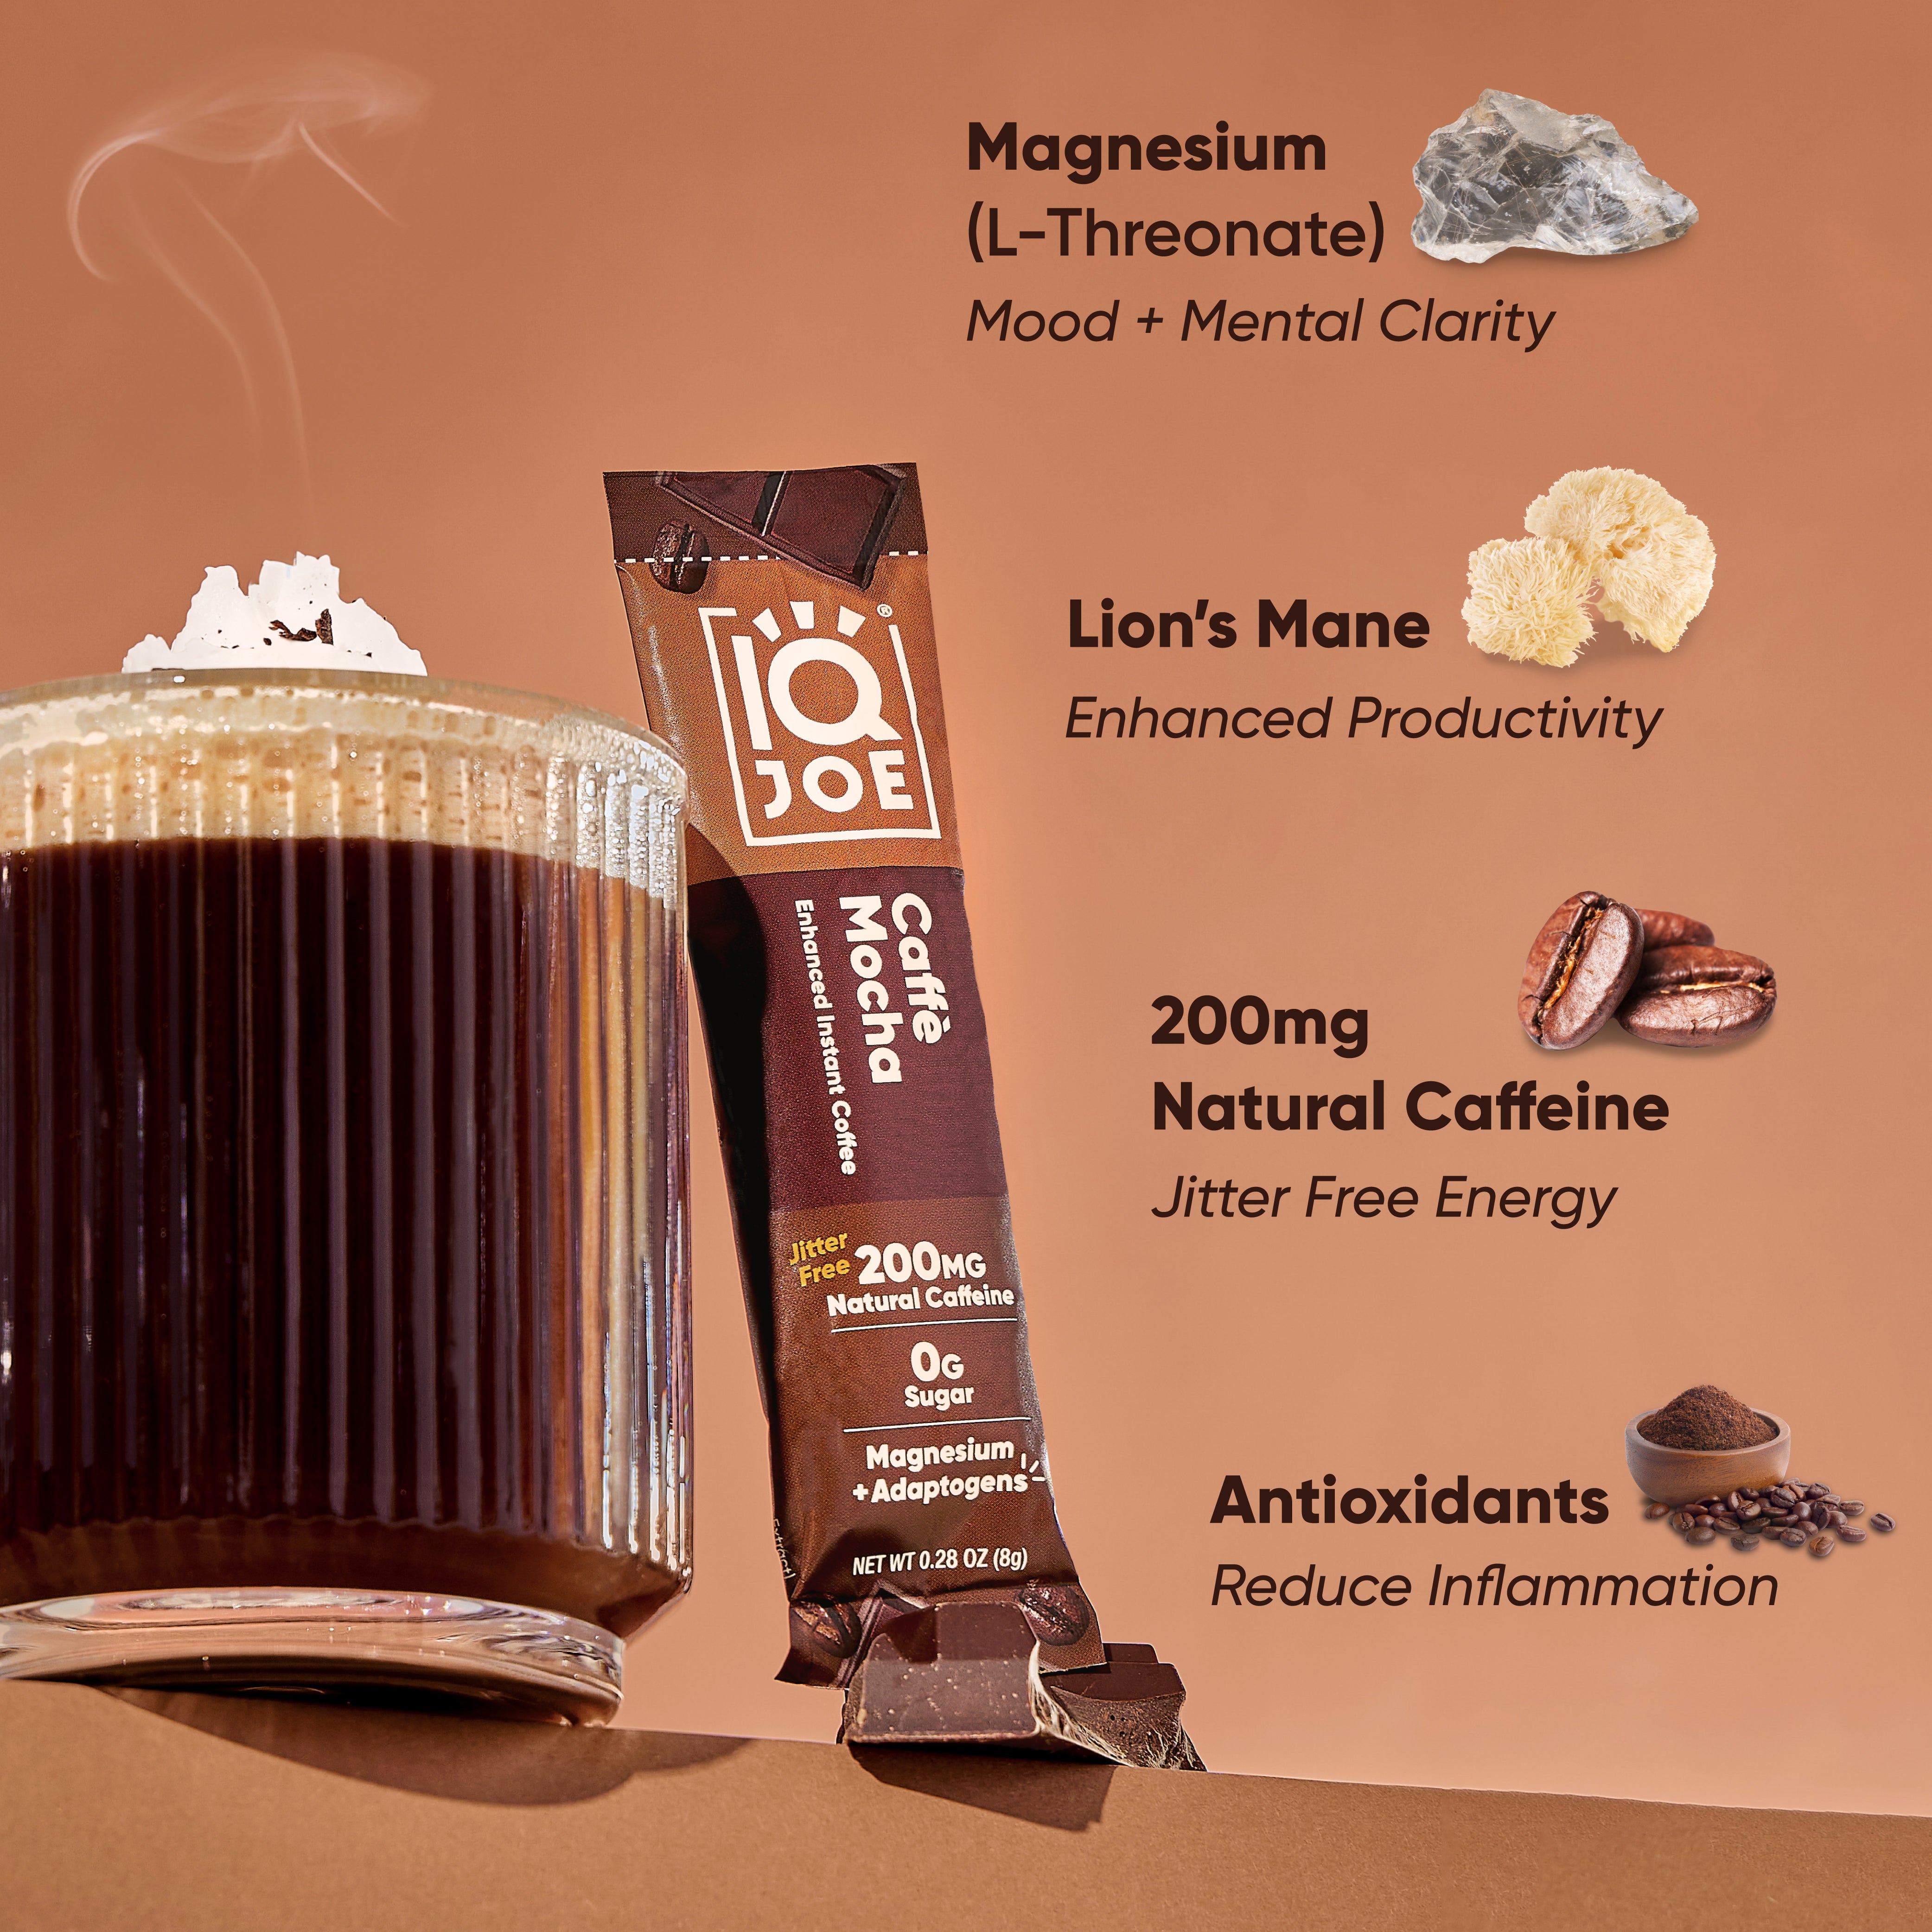 IQJOE Variety Pack Nootropic Coffee with Magnesium L-Threonate, Lion's Mane Mushroom, 200mg of Natural Caffeine, Antioxidants.